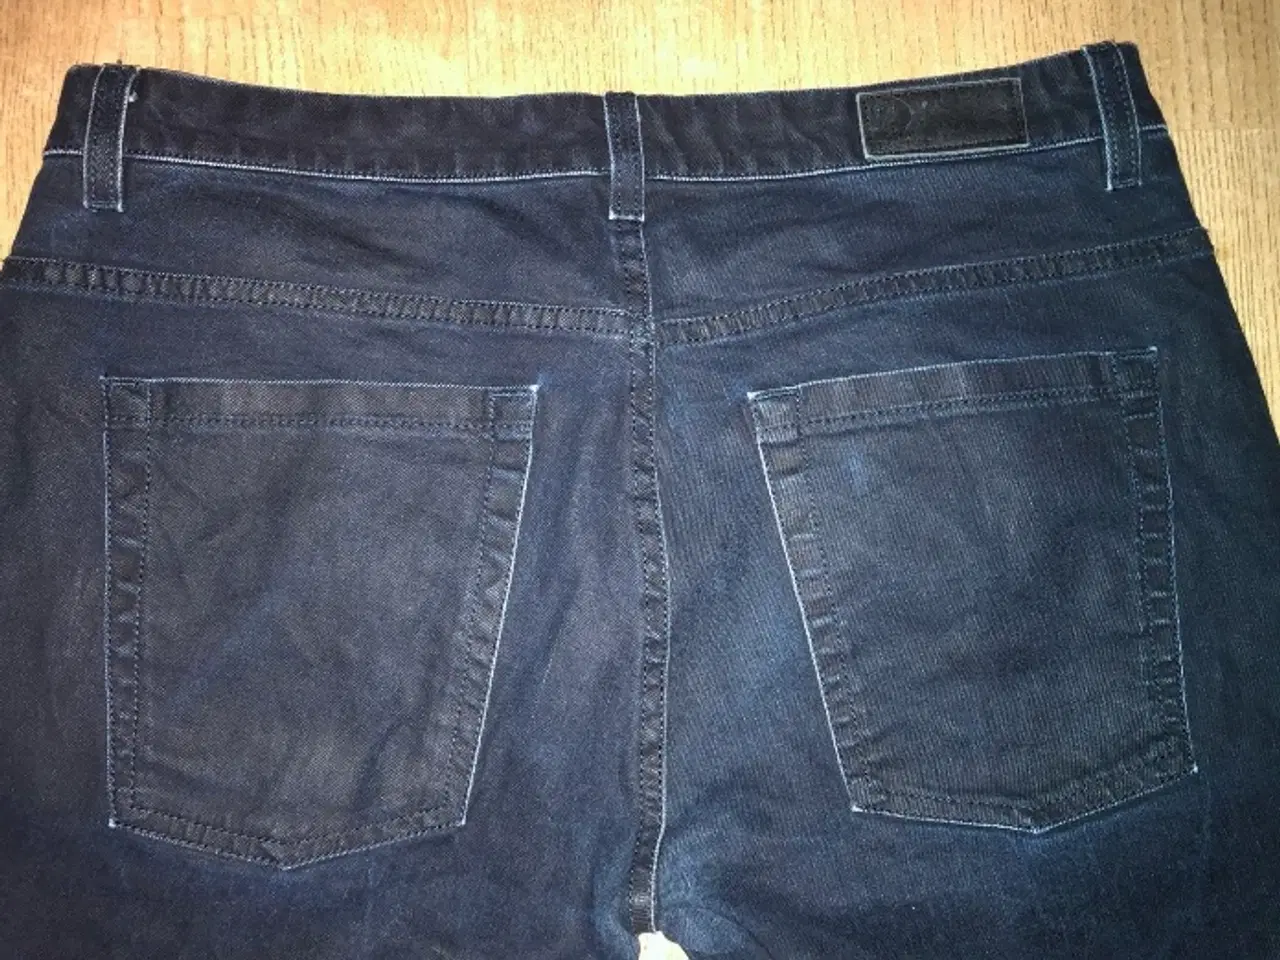 Billede 3 - Sorte jeans fra Karl Lagerfeld str. 33/34